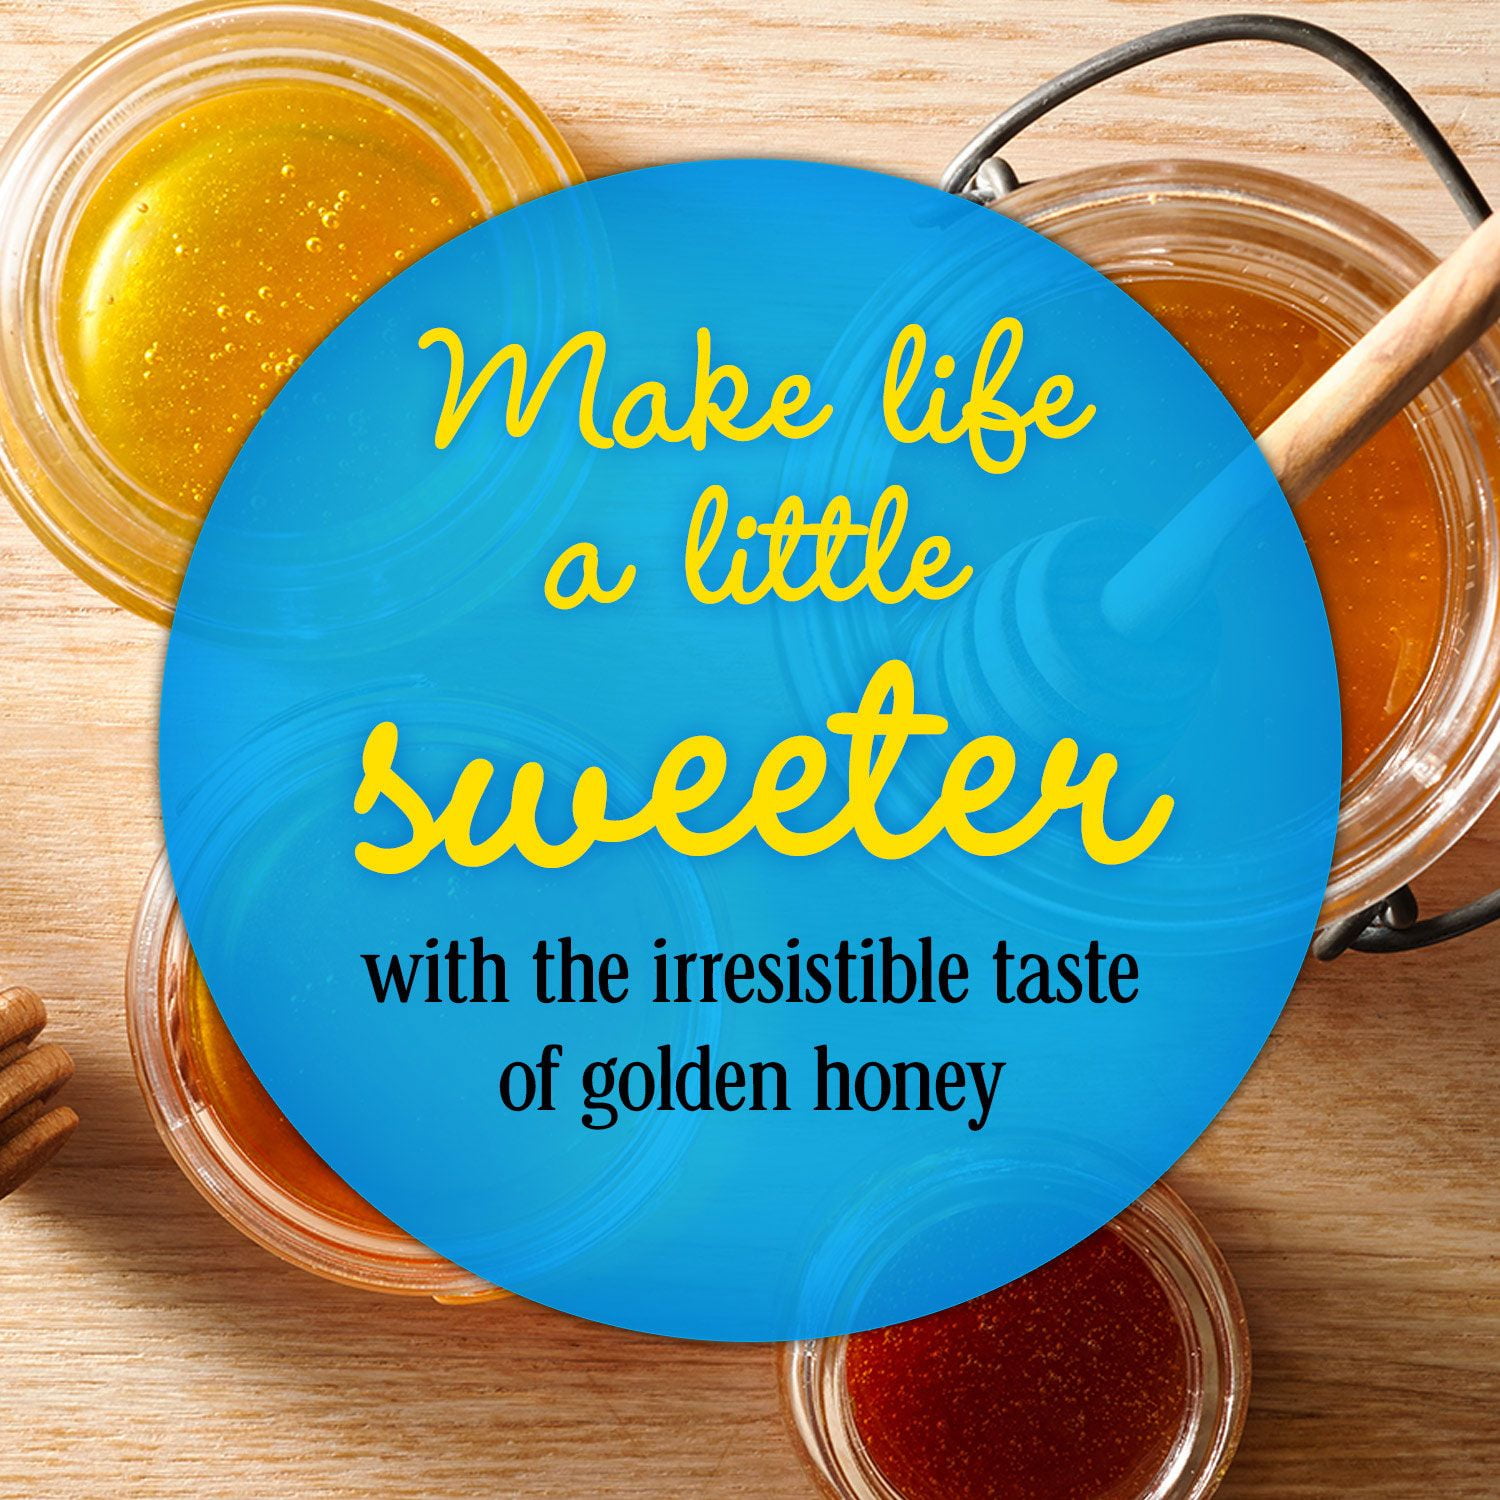 How Sweet It Is: Lawsuit Accuses Honey Nut Cheerios of Deceptive